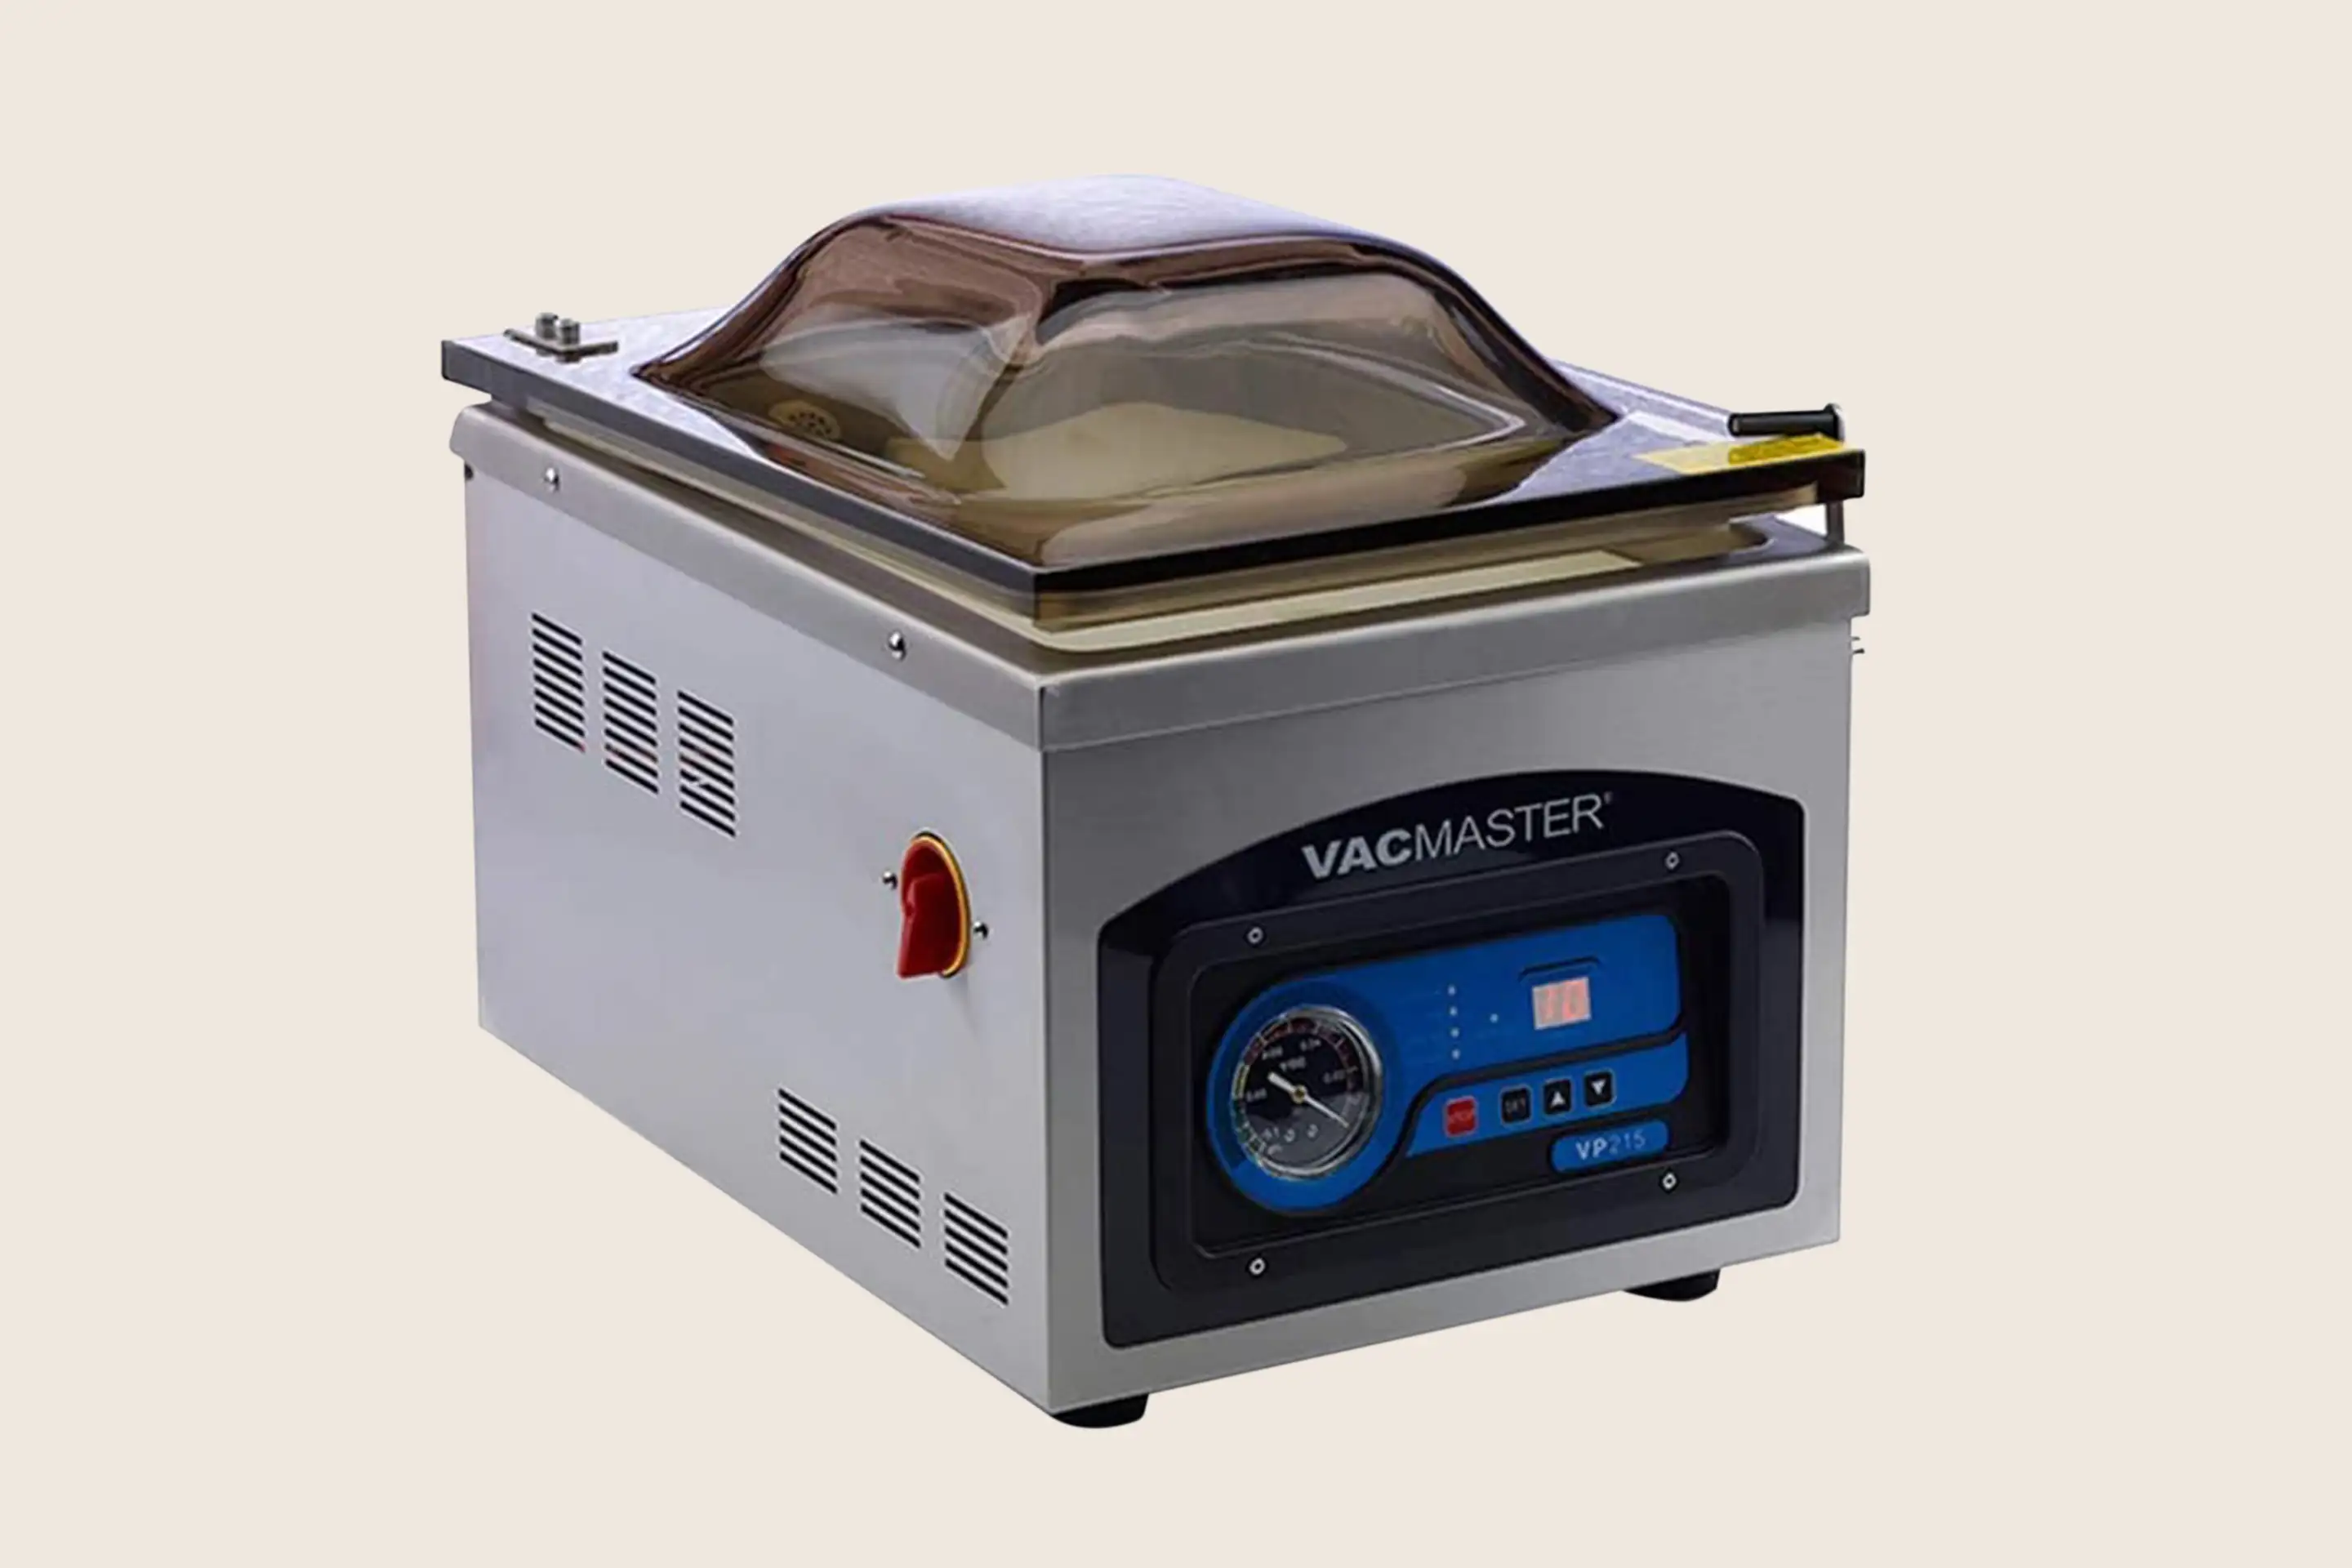 VacMaster VP215 Vacuum Sealer